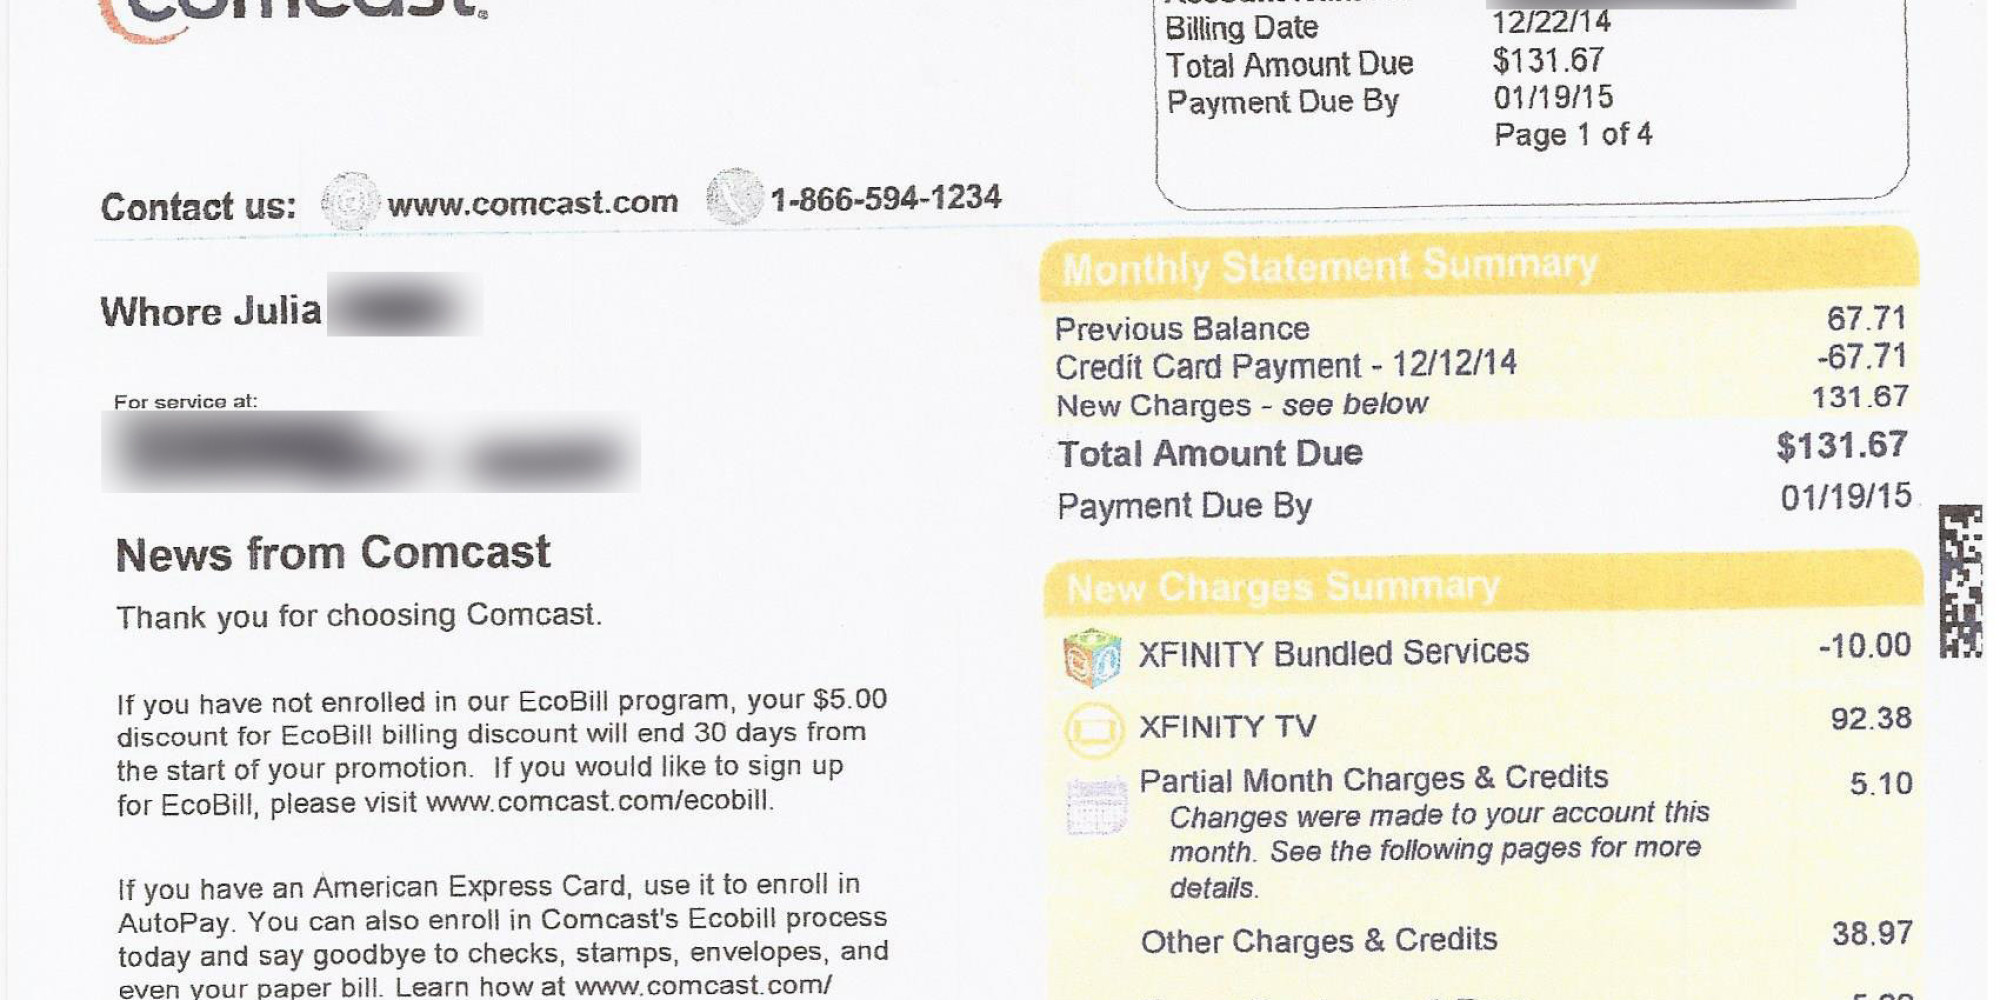 pay my bill xfinity mobile